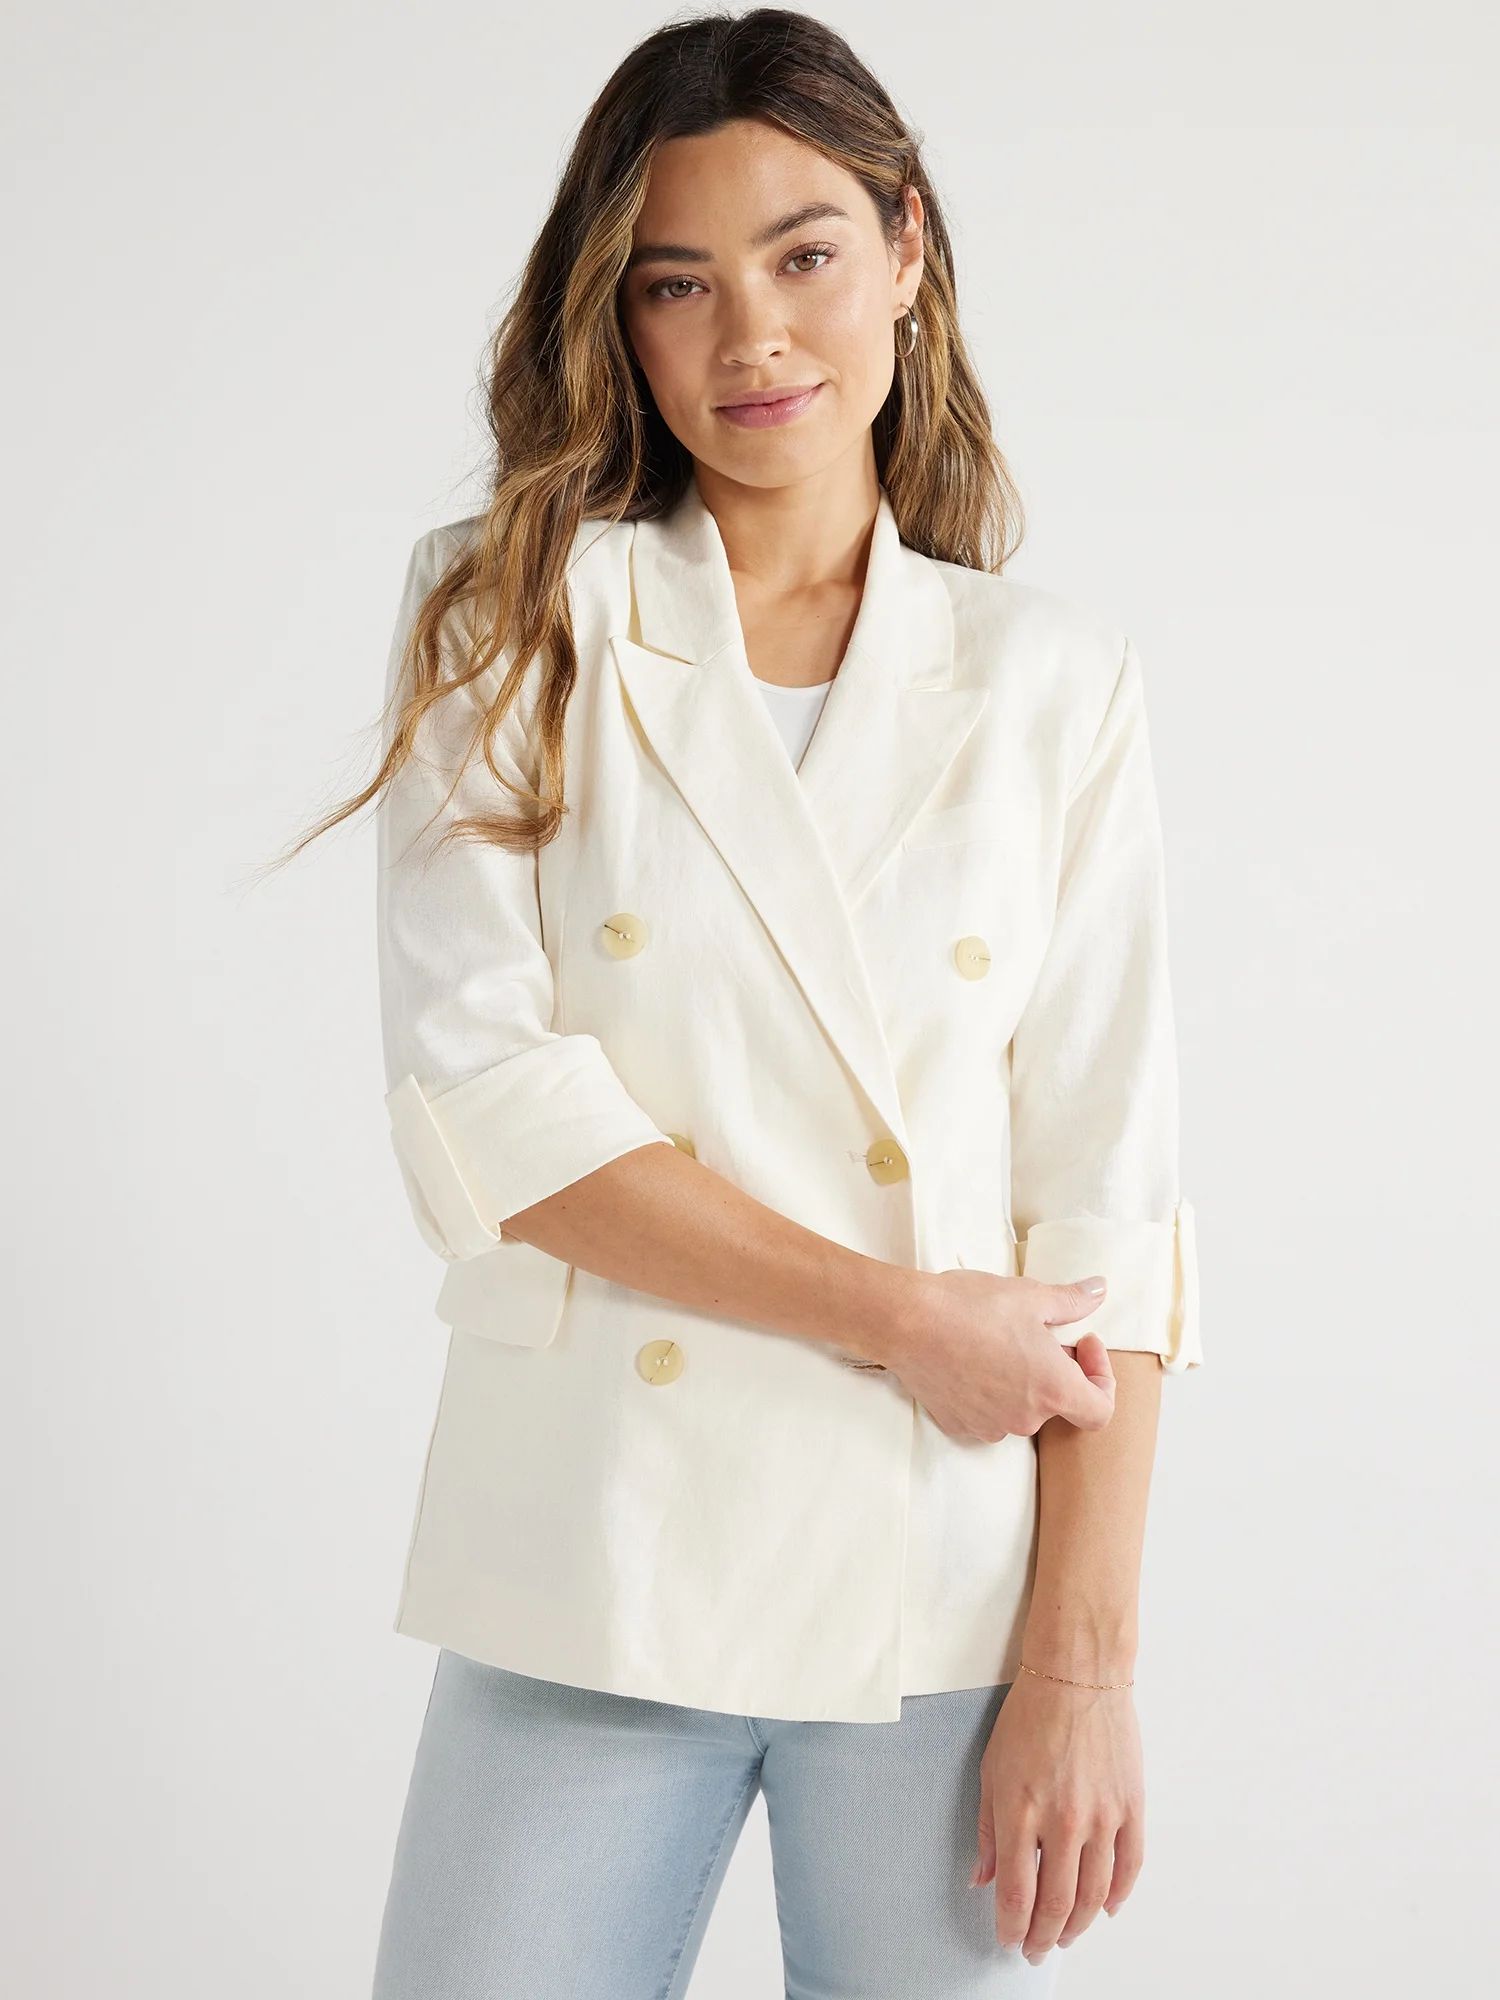 Sofia Jeans Women's and Women's Plus Double Breasted Linen Blend Blazer, Sizes XS-5X | Walmart (US)